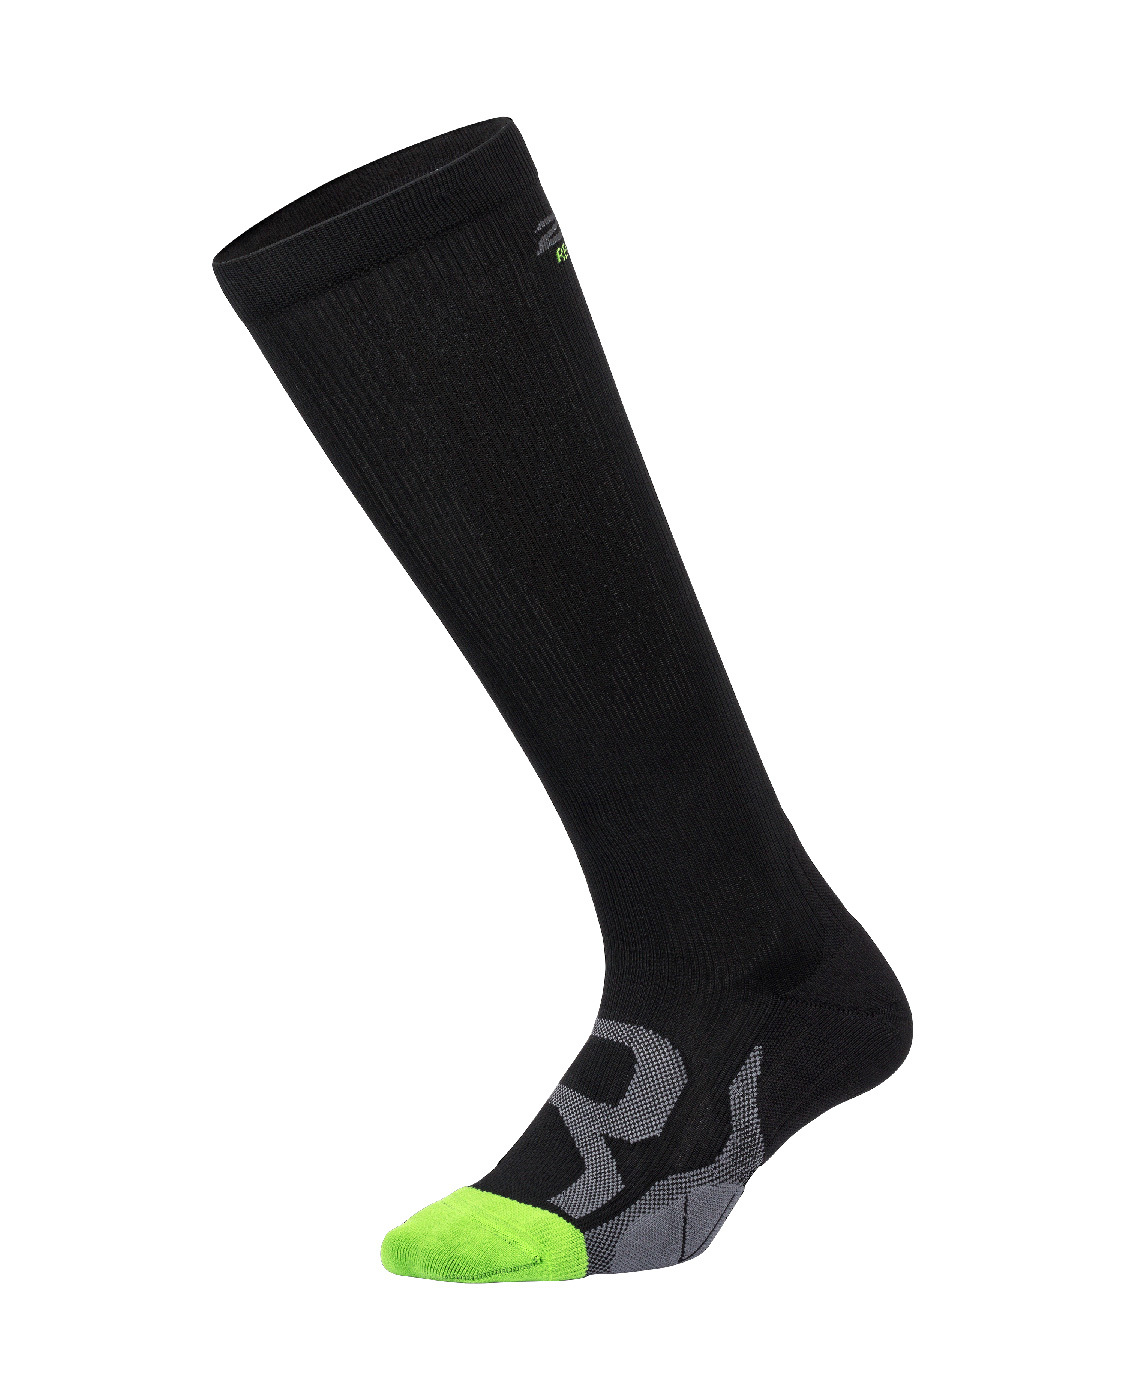 2XU Unisex Comp Socks For Recovery - Black/Grey